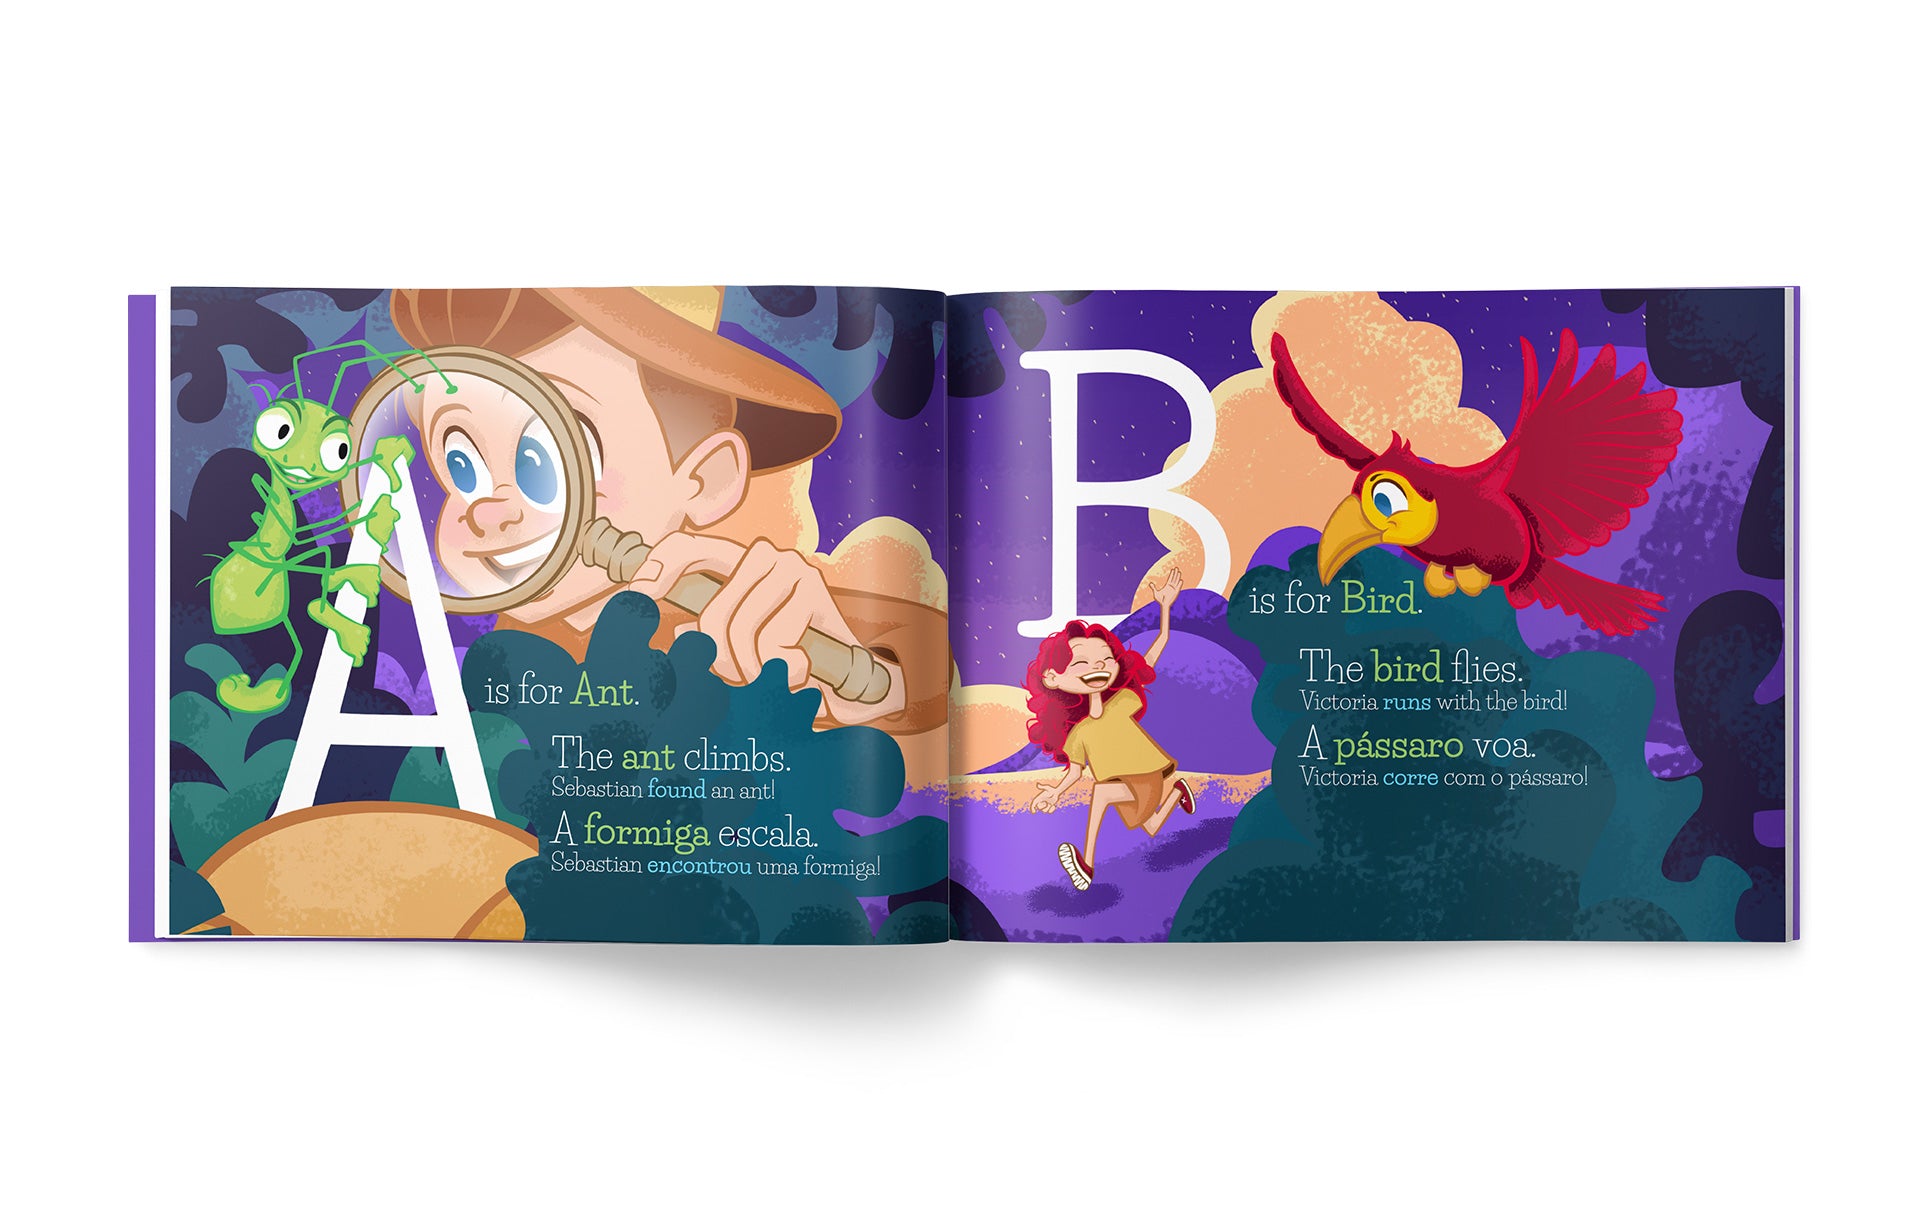 LivoLingo™ Brand Design and Children's Book Design by Scott Luscombe